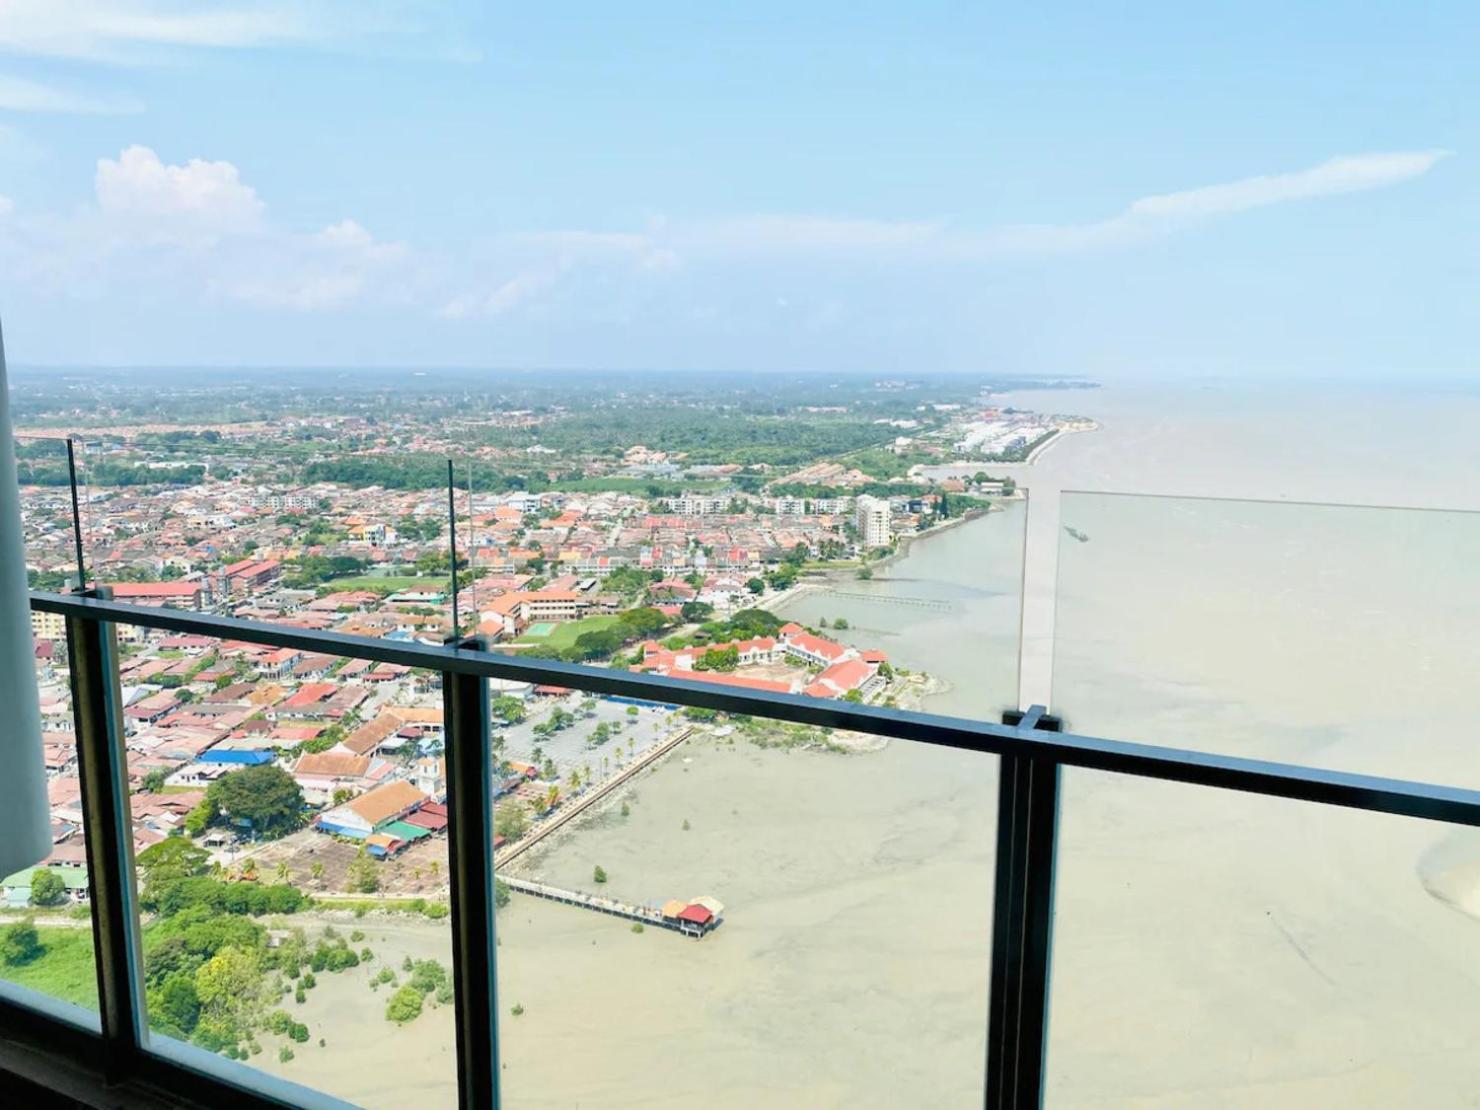 Silverscape Seaview Residence Melaka Экстерьер фото